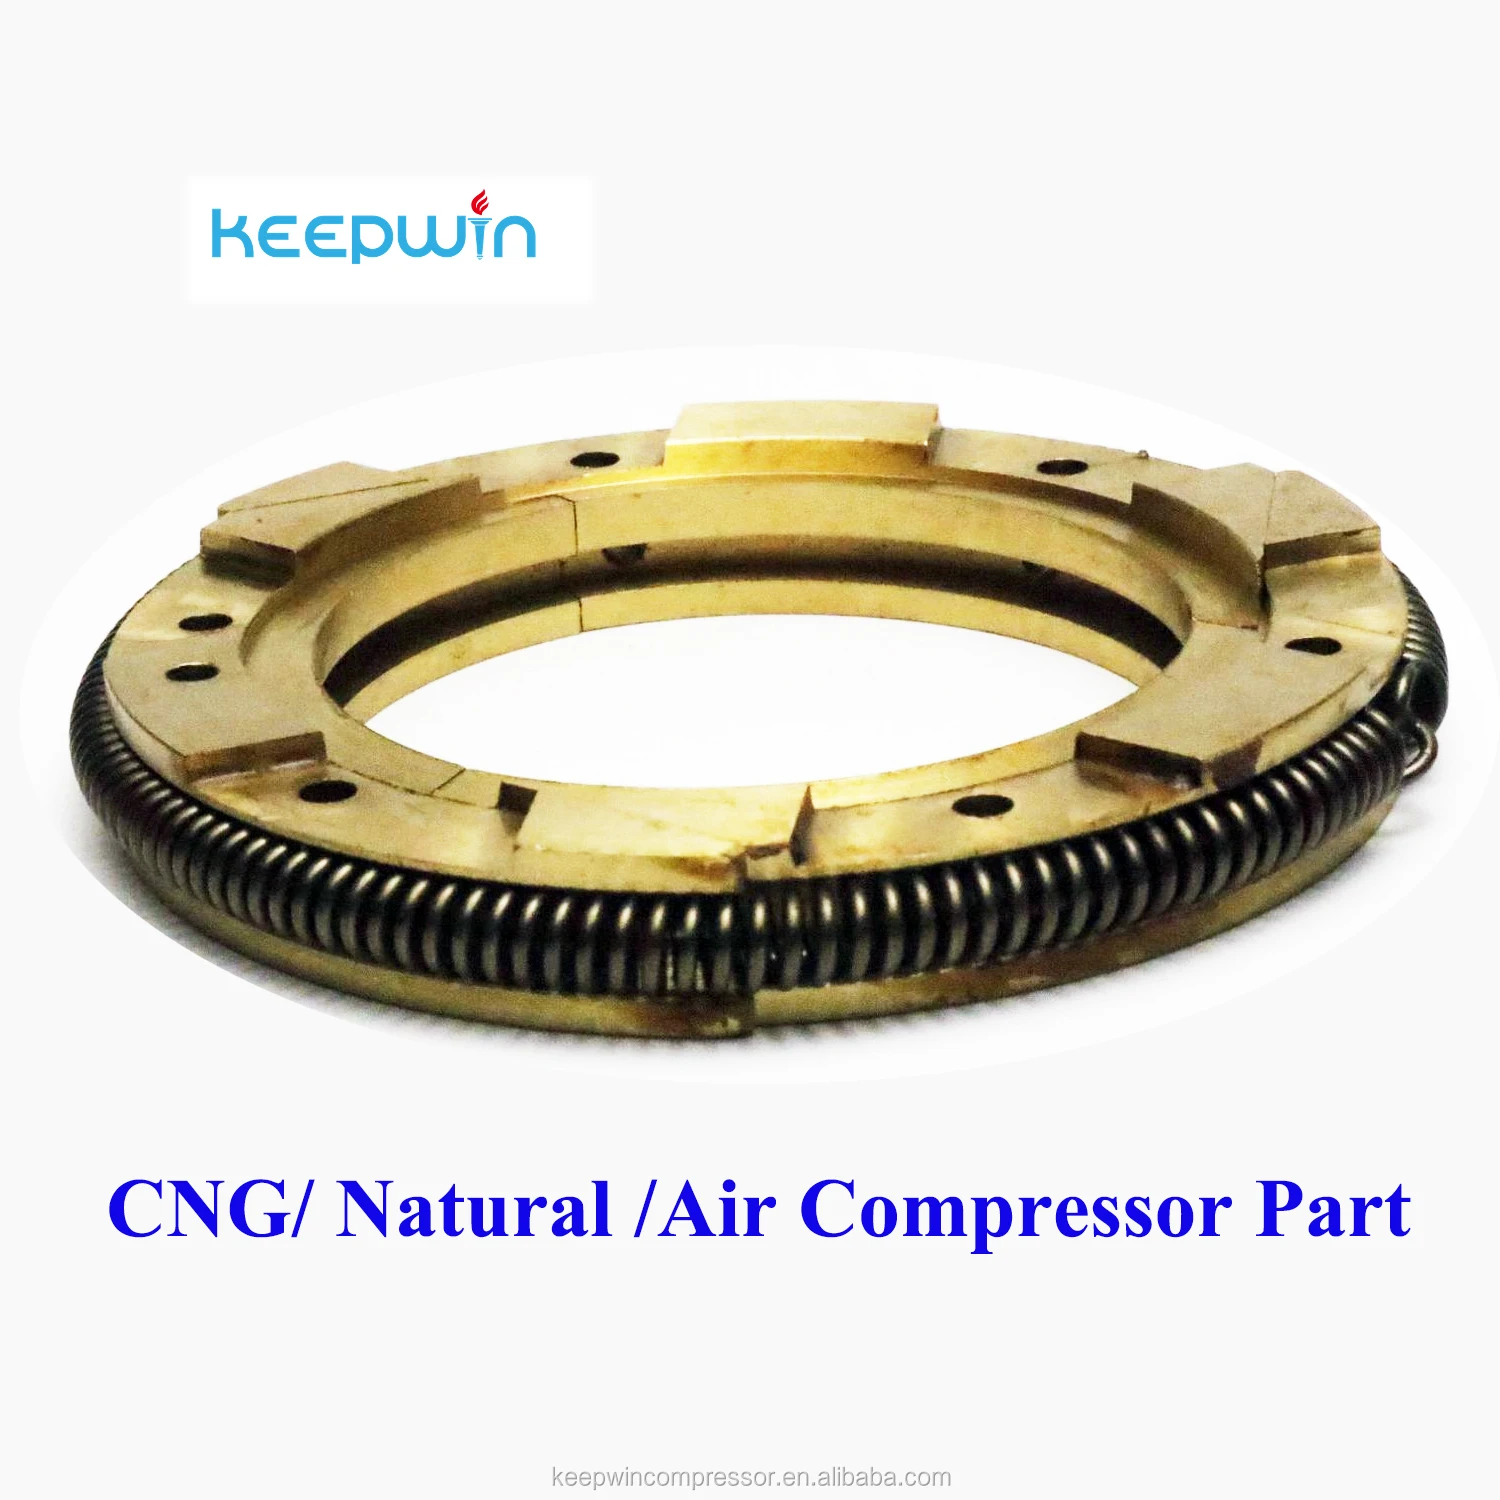 Hydrogen Natural Gas Compressor Special customize for Process Gas High pressure compressor valve spare part